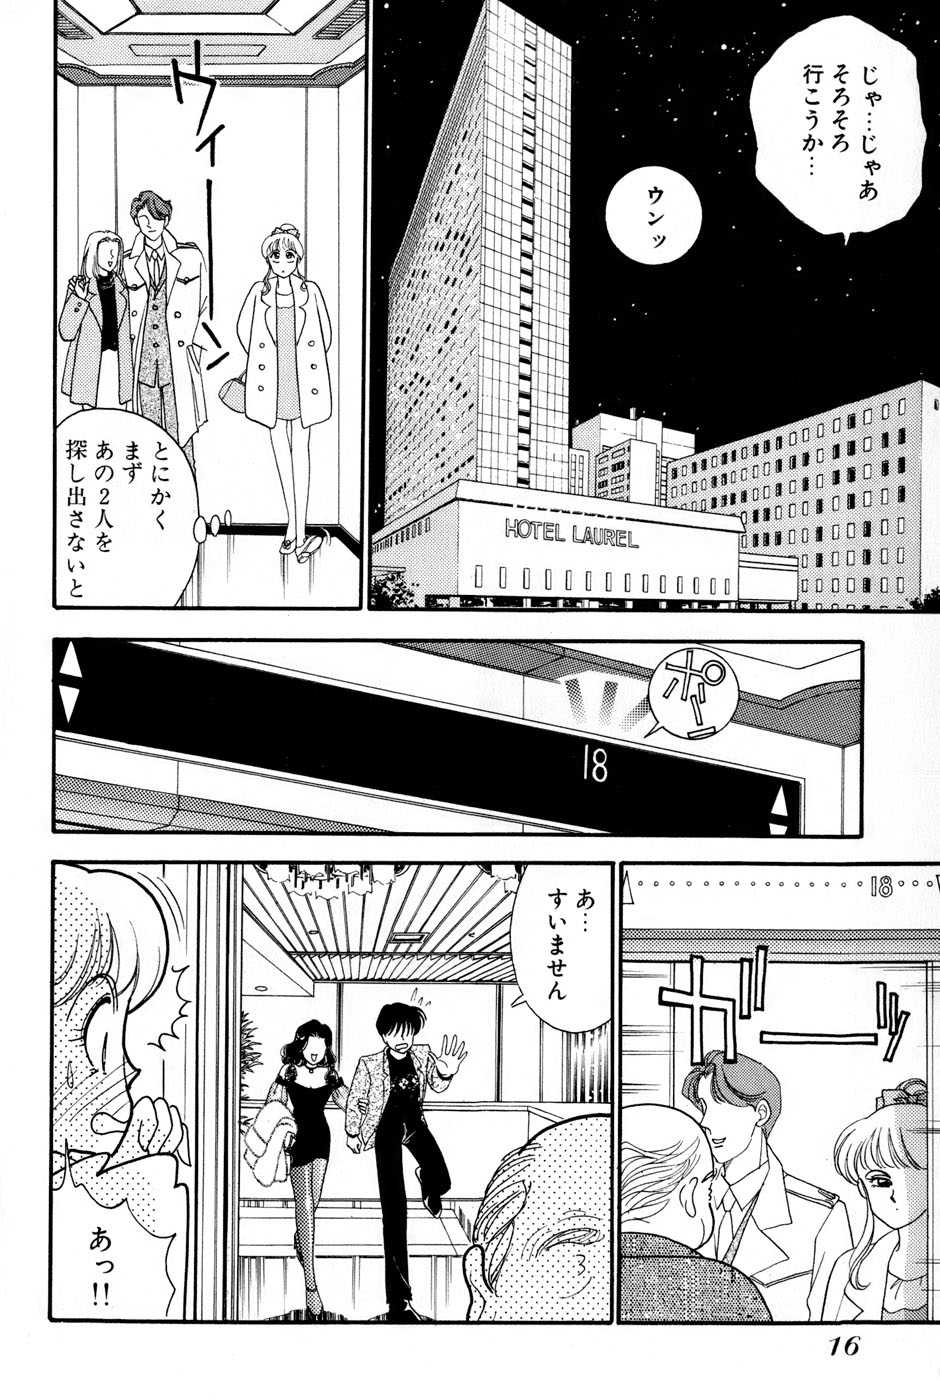 [Arimura Shinobu] Sprite Vol. 3 [有村しのぶ] SPRITE スプライト 第3巻